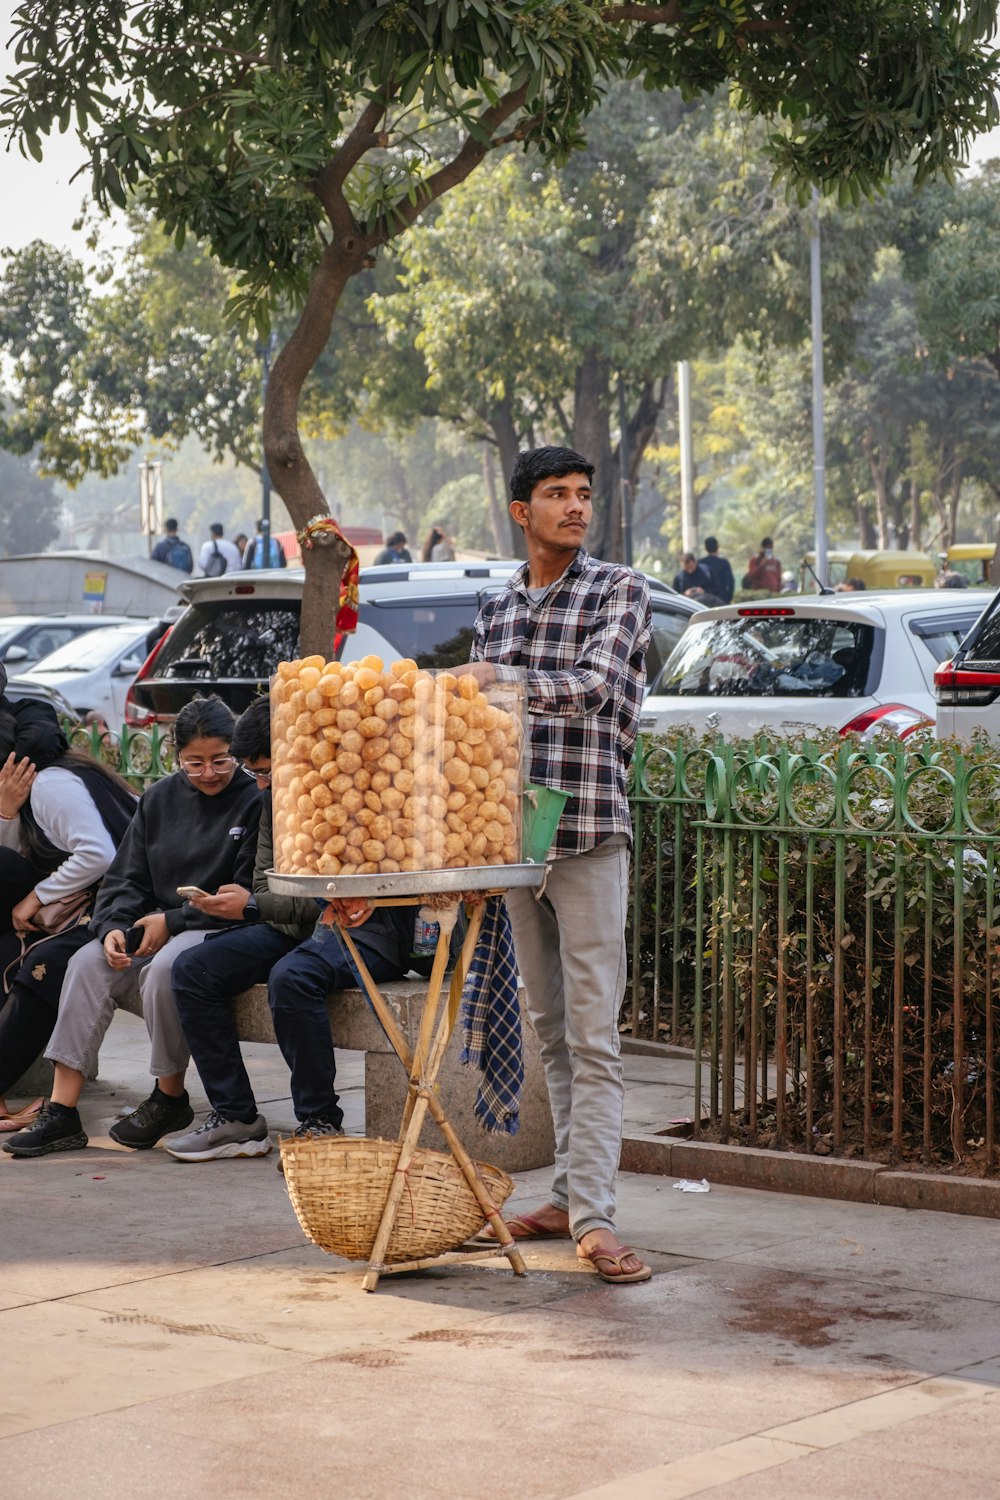 a man selling food on a street corner